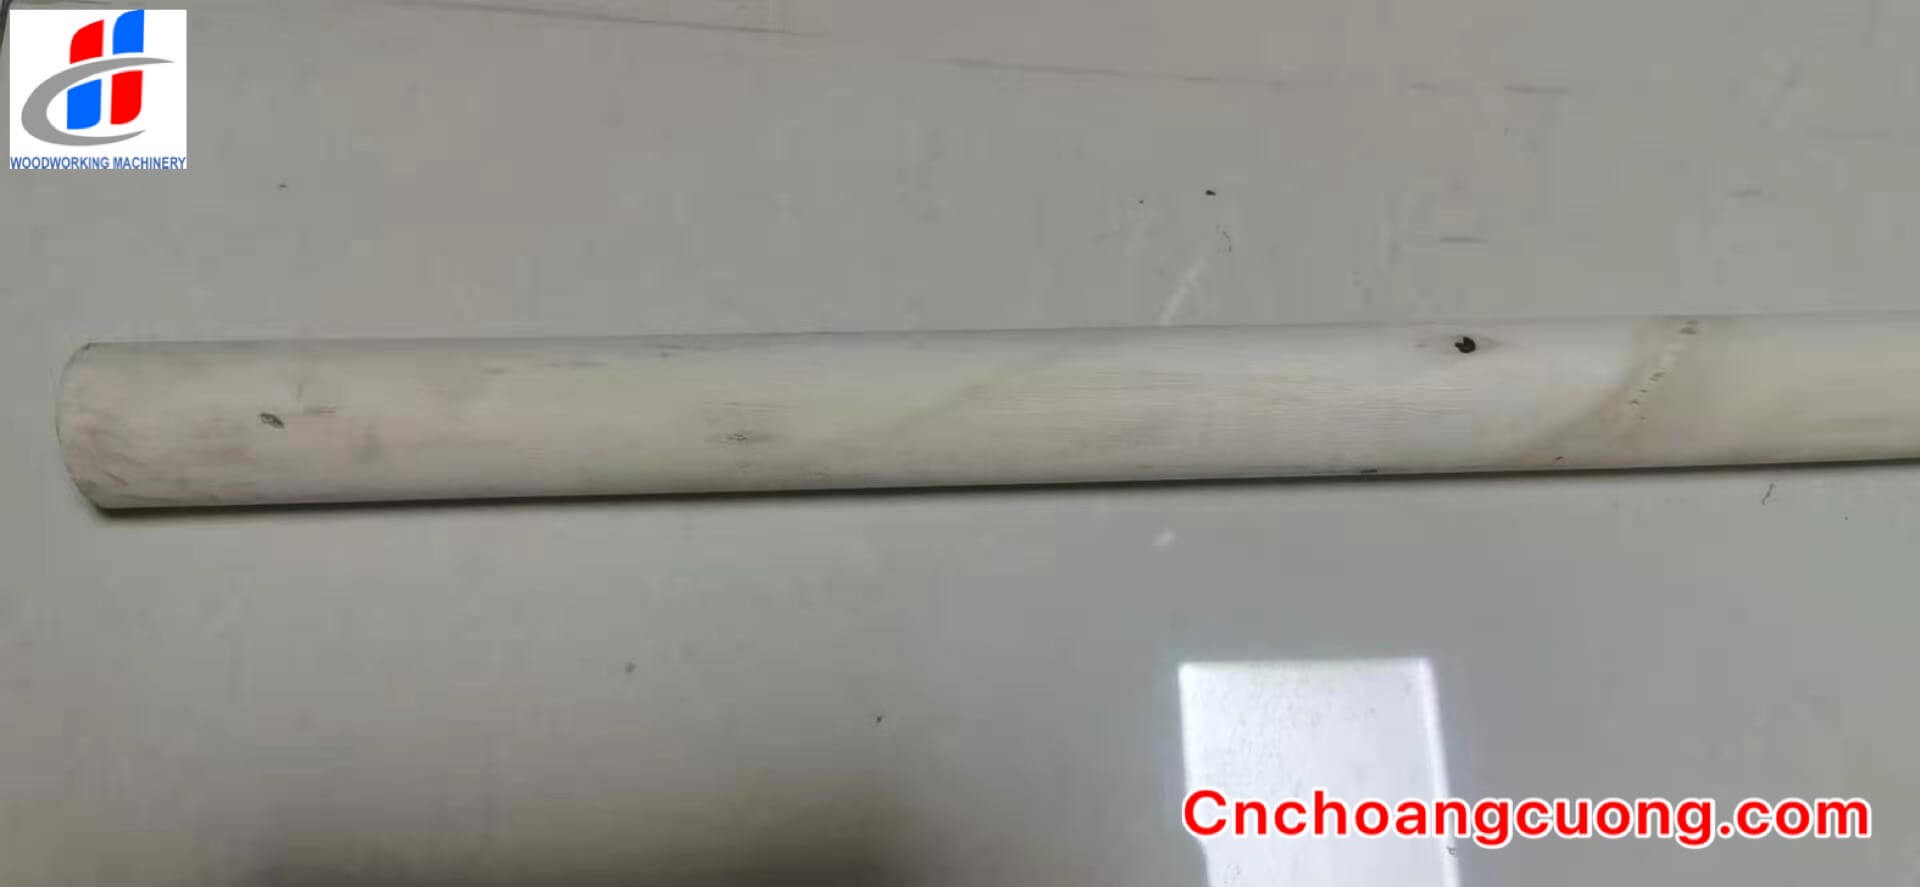 https://cnchoangcuong.com/product/may-chuot-cay-tron-mc9080b/